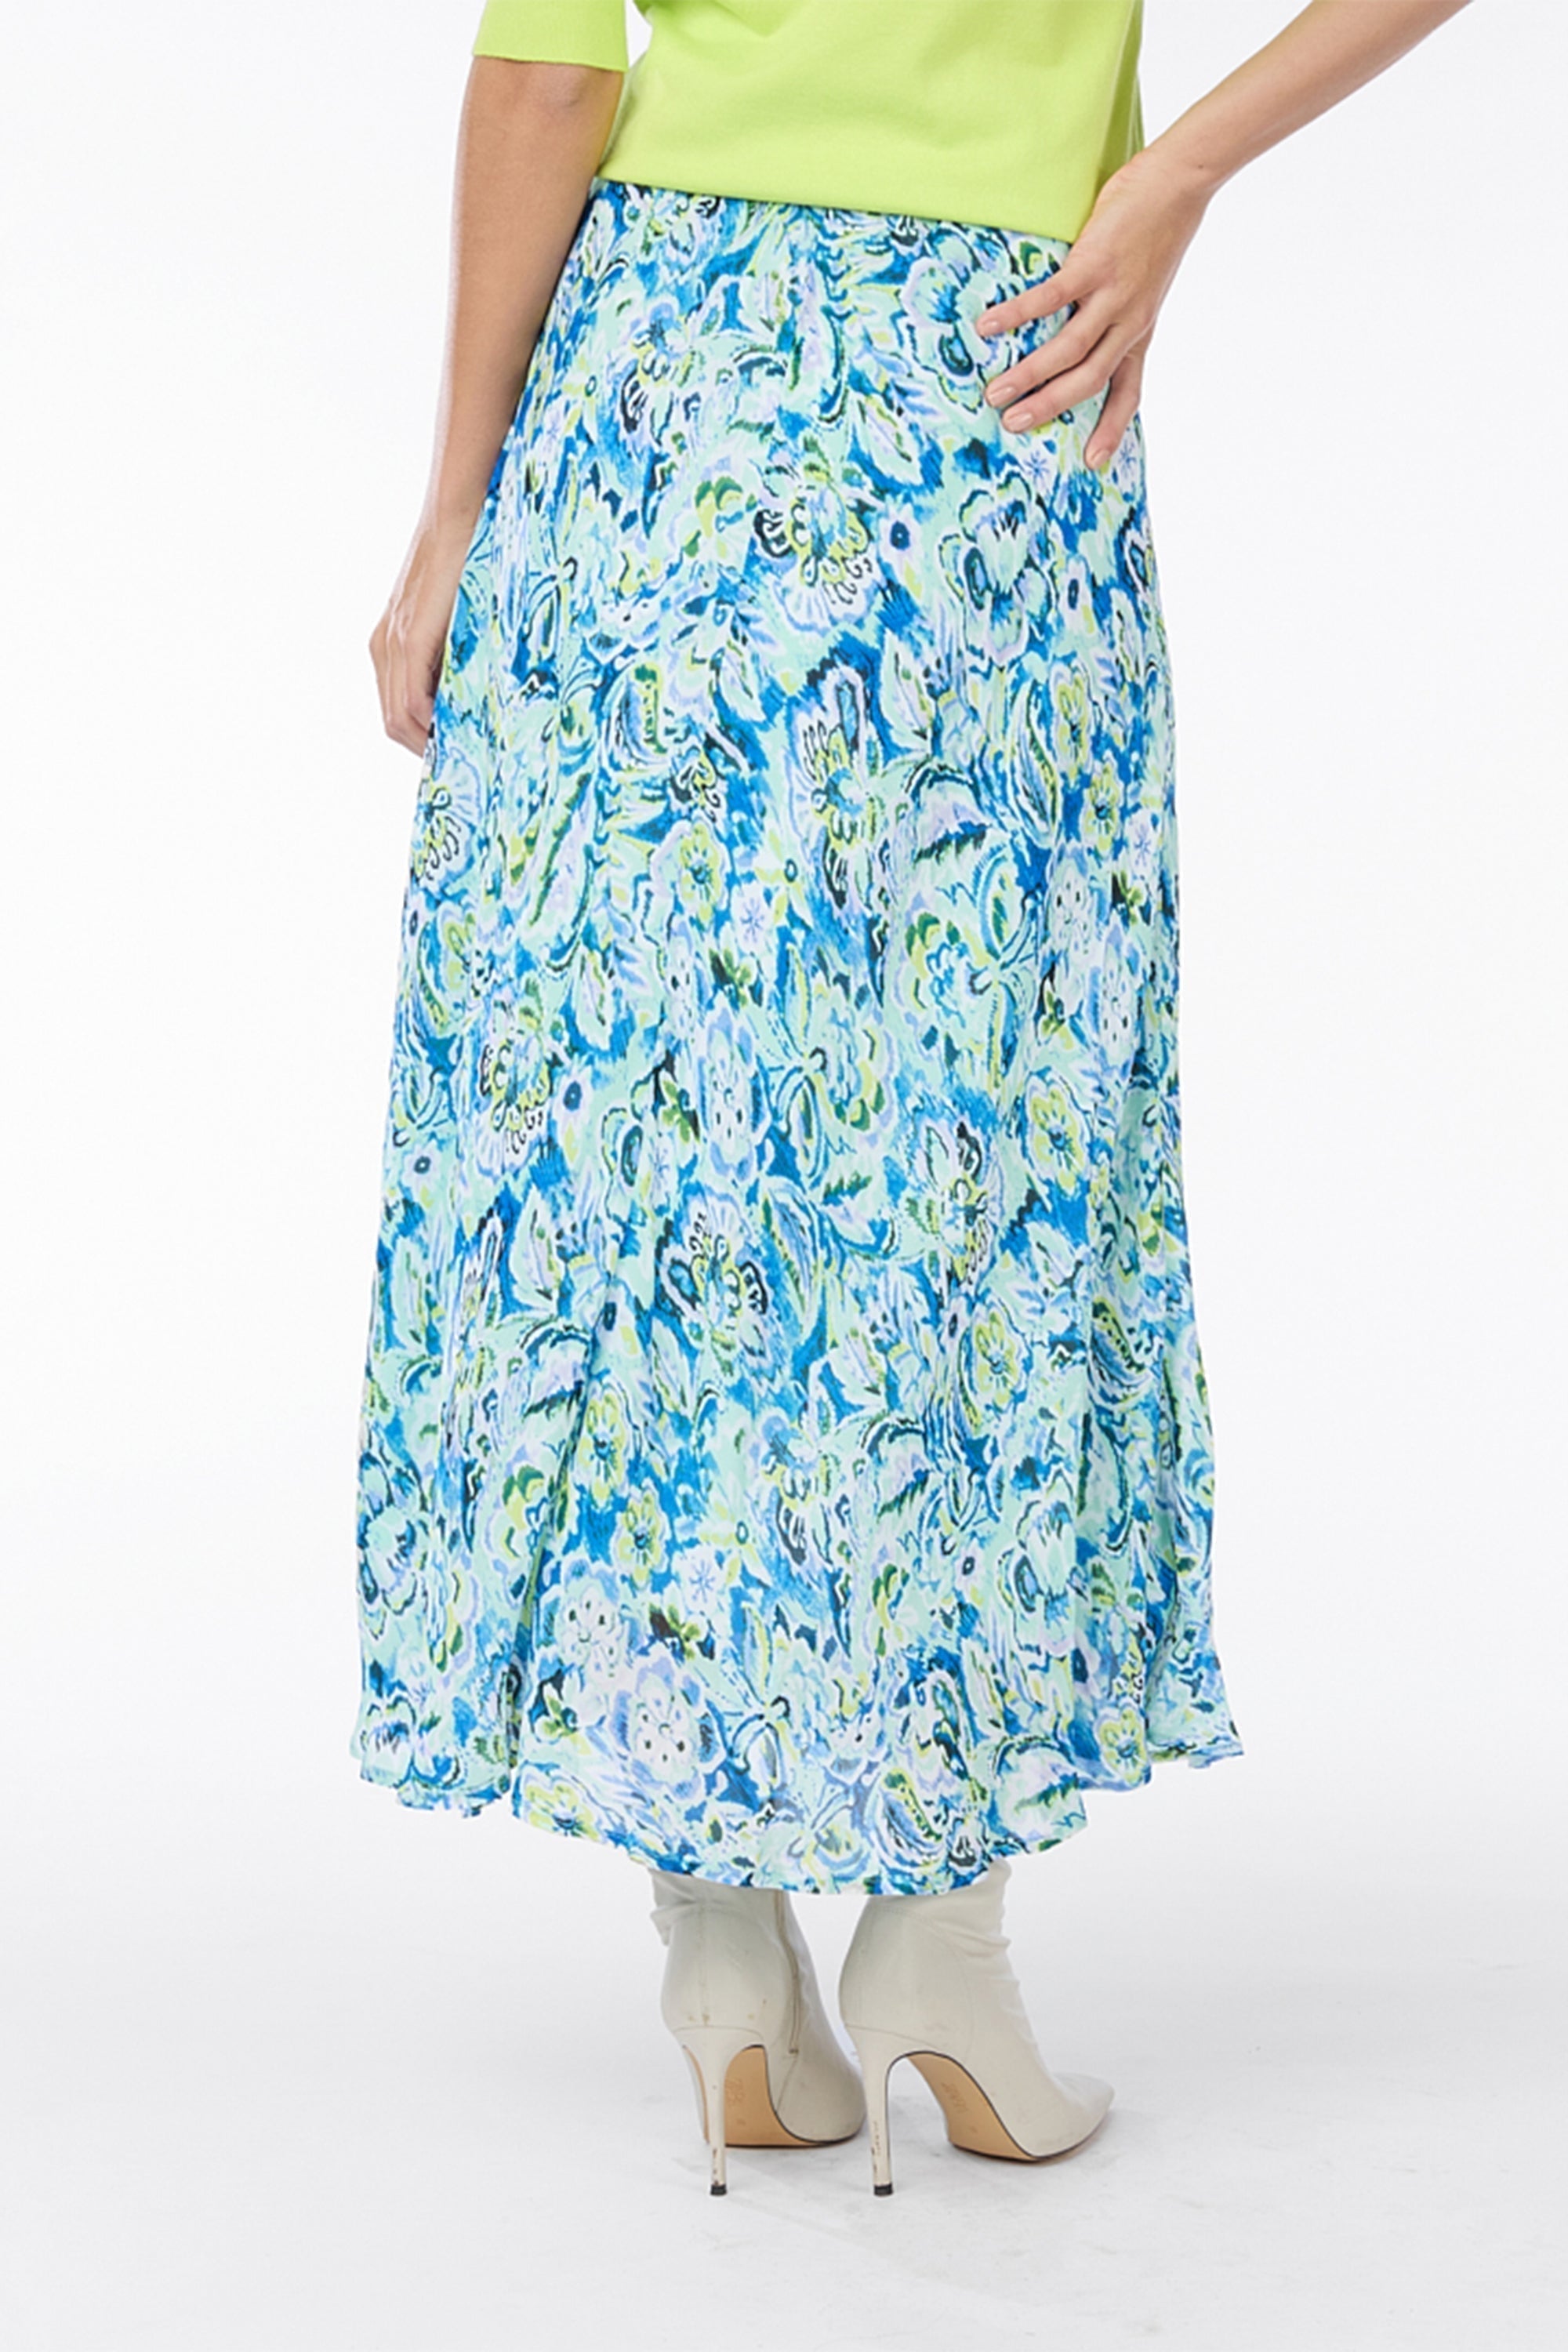 Back view of Esqulao (sp2415008) Blue Floral Chiffon skirt